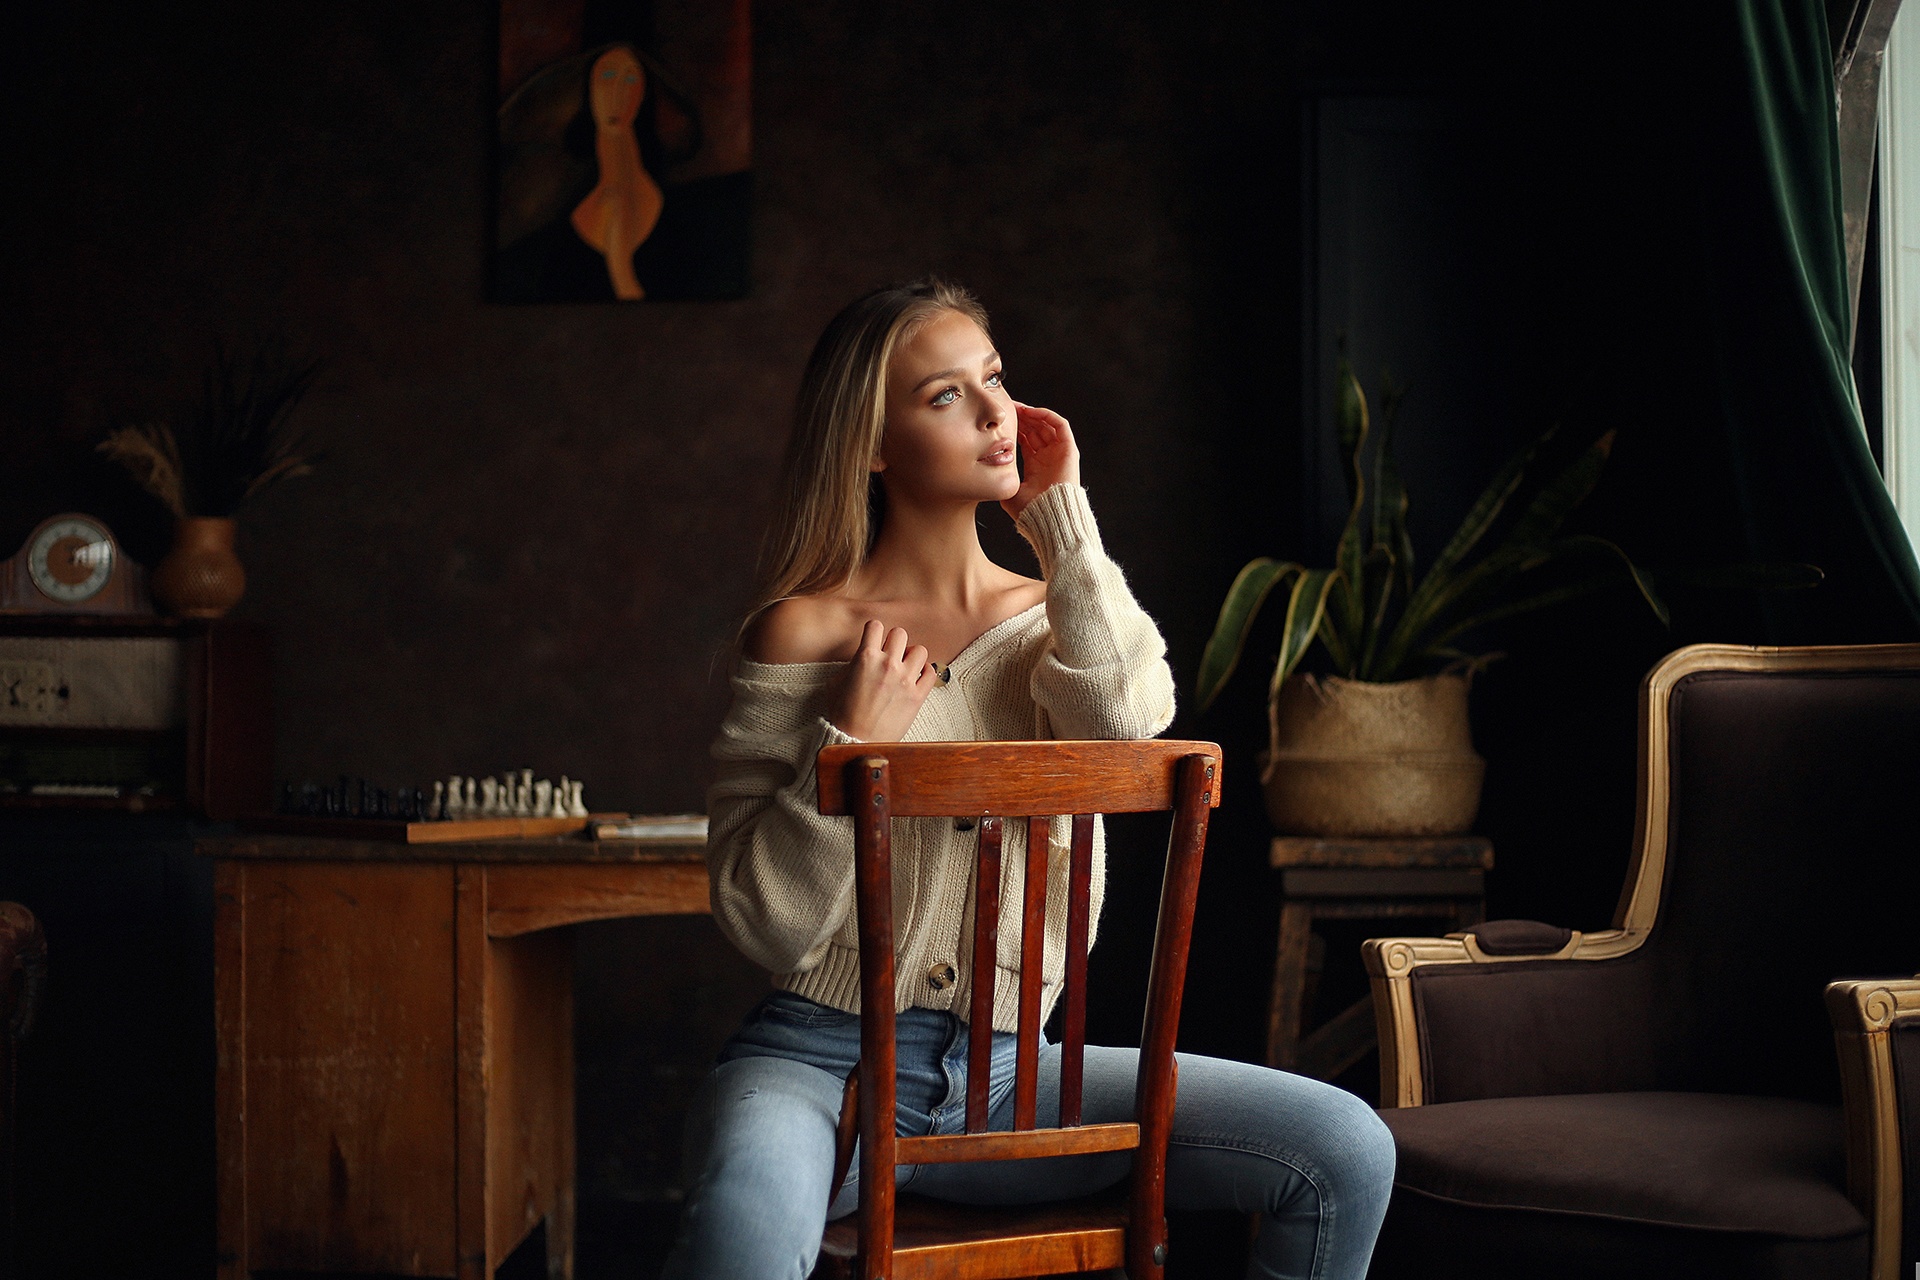 Dmitry Arhar Women Model Blonde Women Indoors Chair Sitting Jeans Sweater Couch Chess Desk Plants Hi 1920x1280